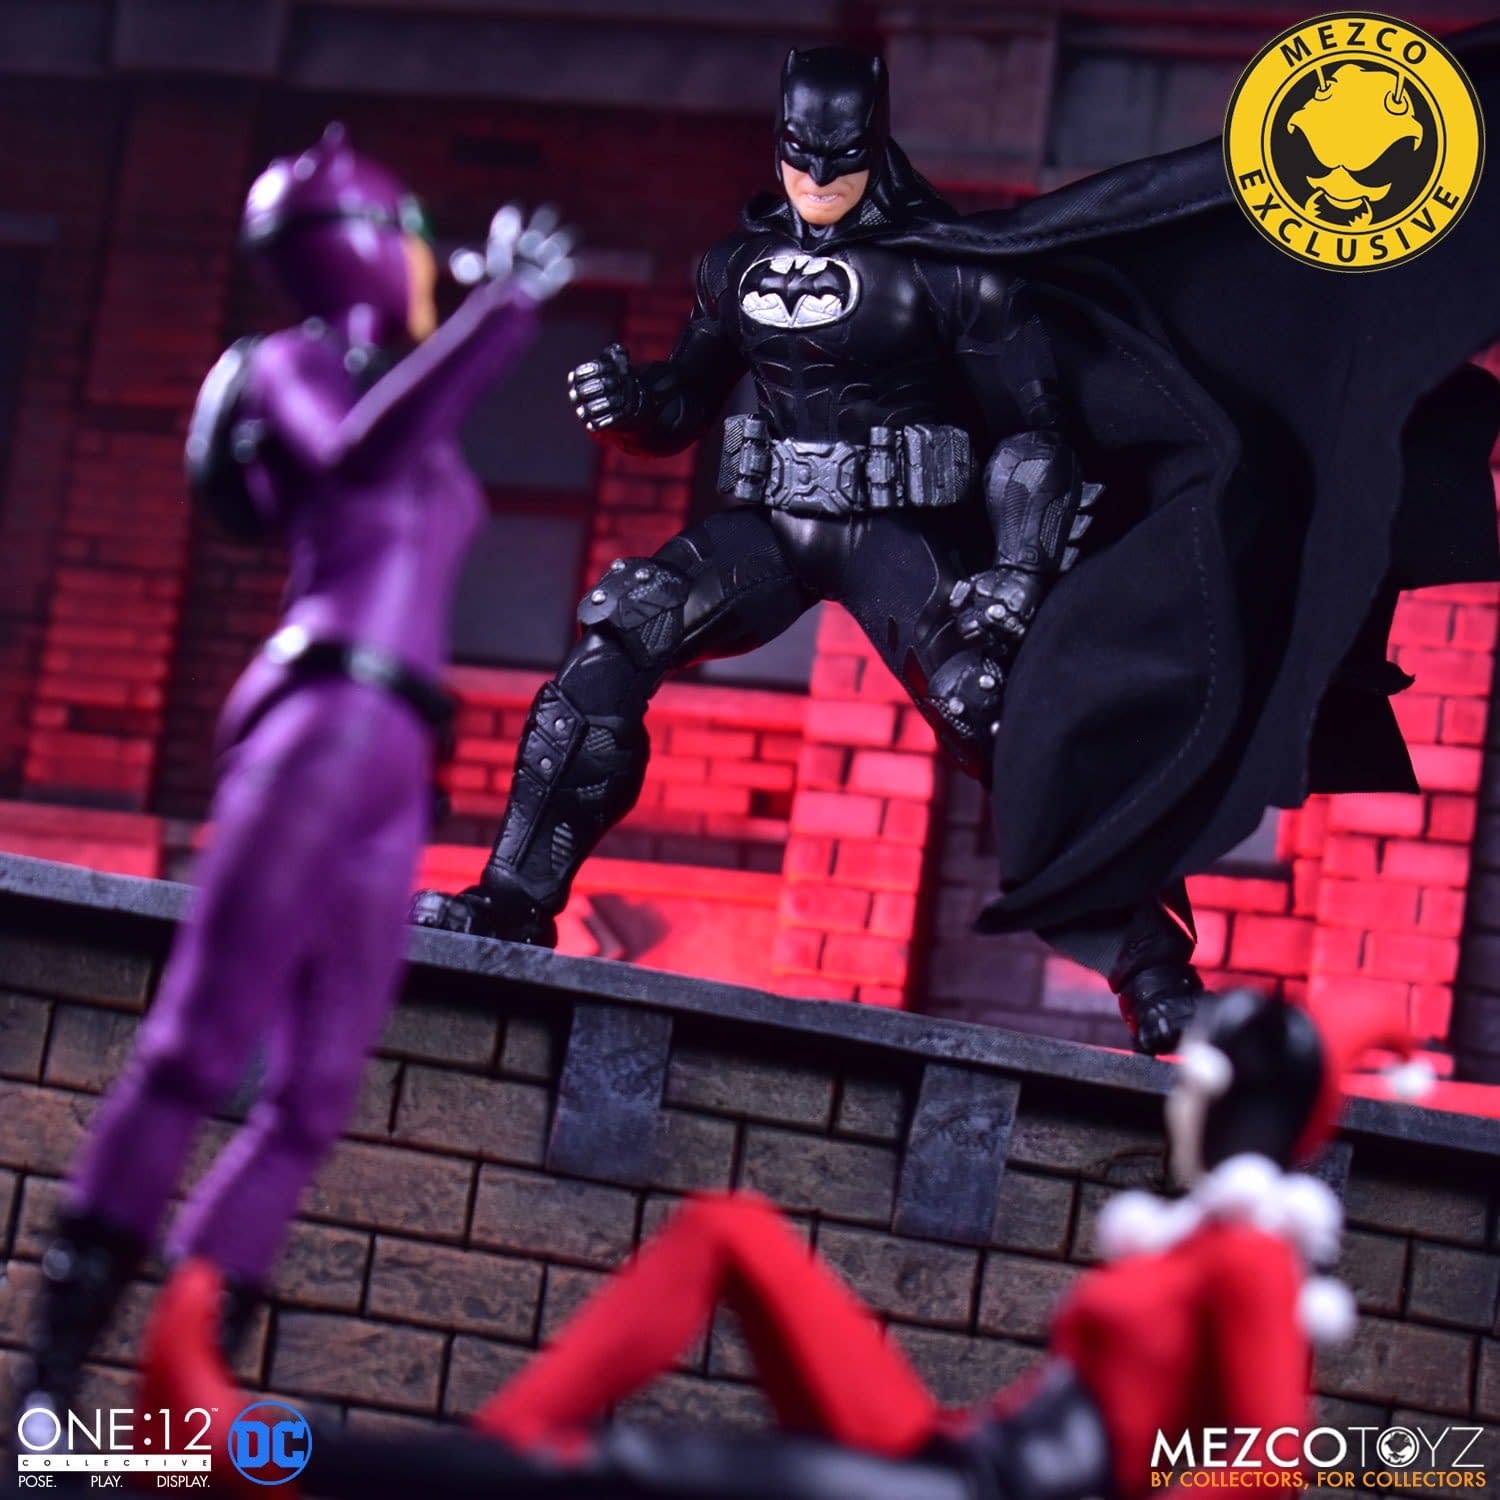 IN HAND Mezco One:12 Supreme Knight Batman Shadow Edition MDX Exclusive 